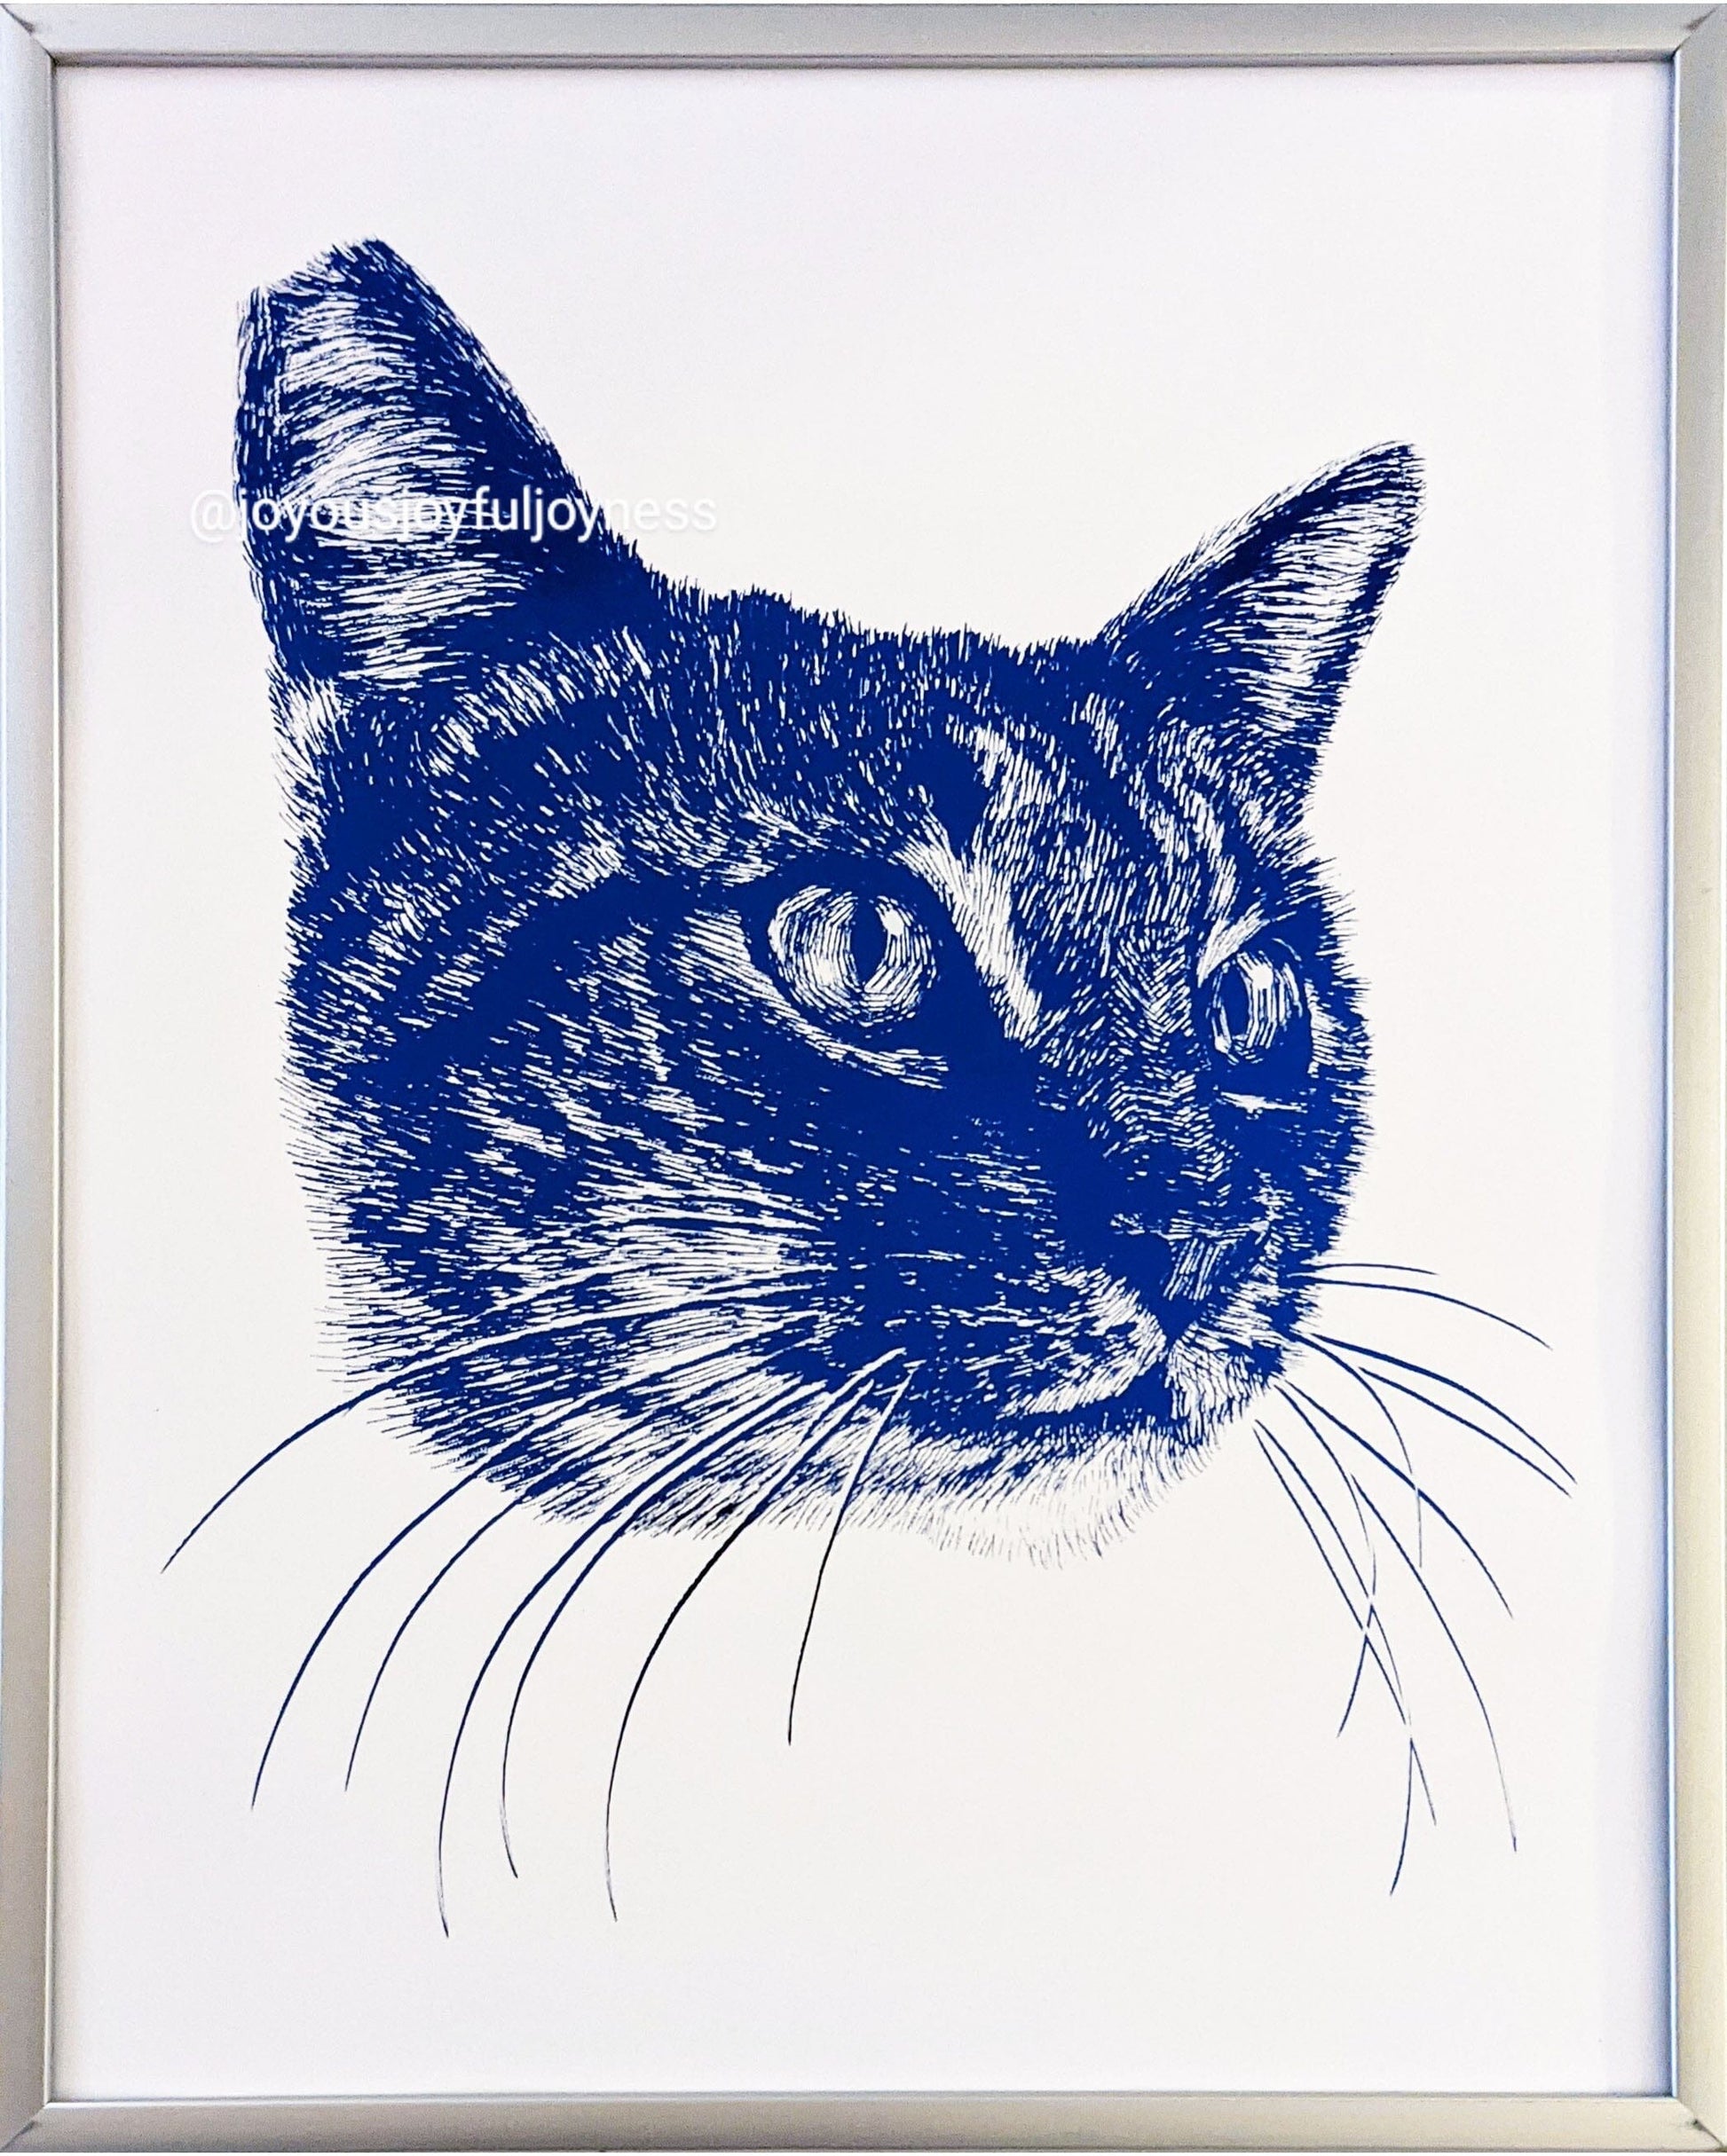 Handmade Custom Cat Portraits Posters, Prints, & Visual Artwork JoyousJoyfulJoyness 